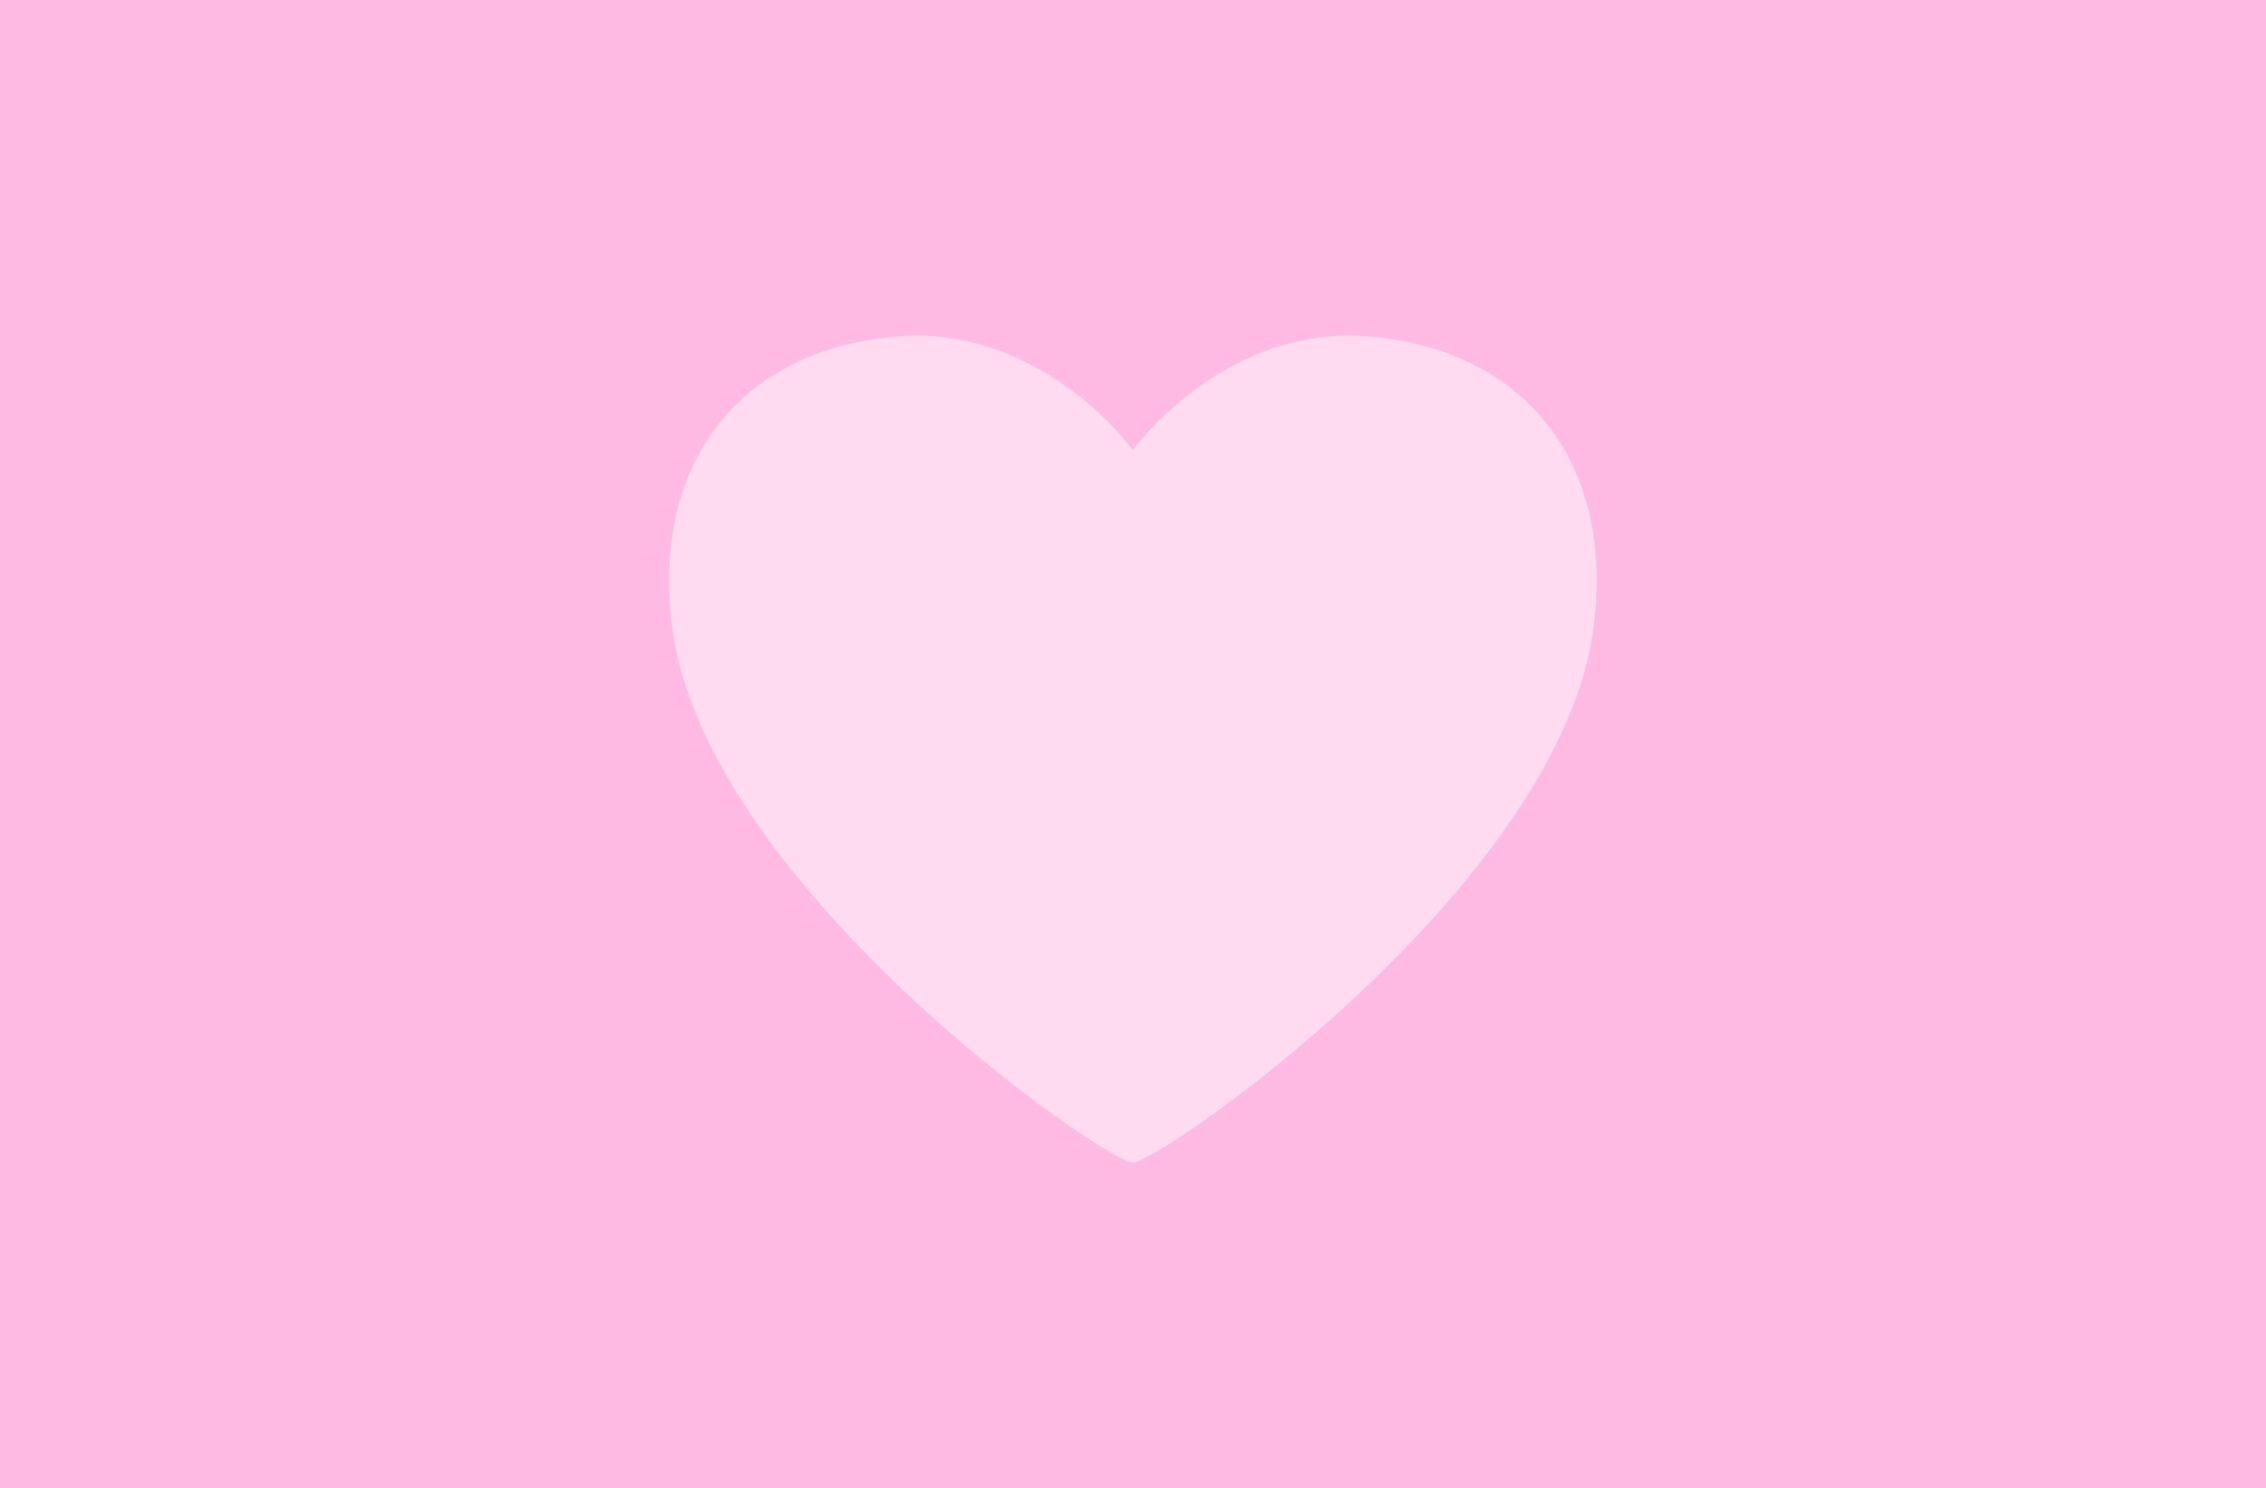 2266x1488 wallpaper Love Heart Pink Background iPad Wallpaper 2266x1488 pixels resolution